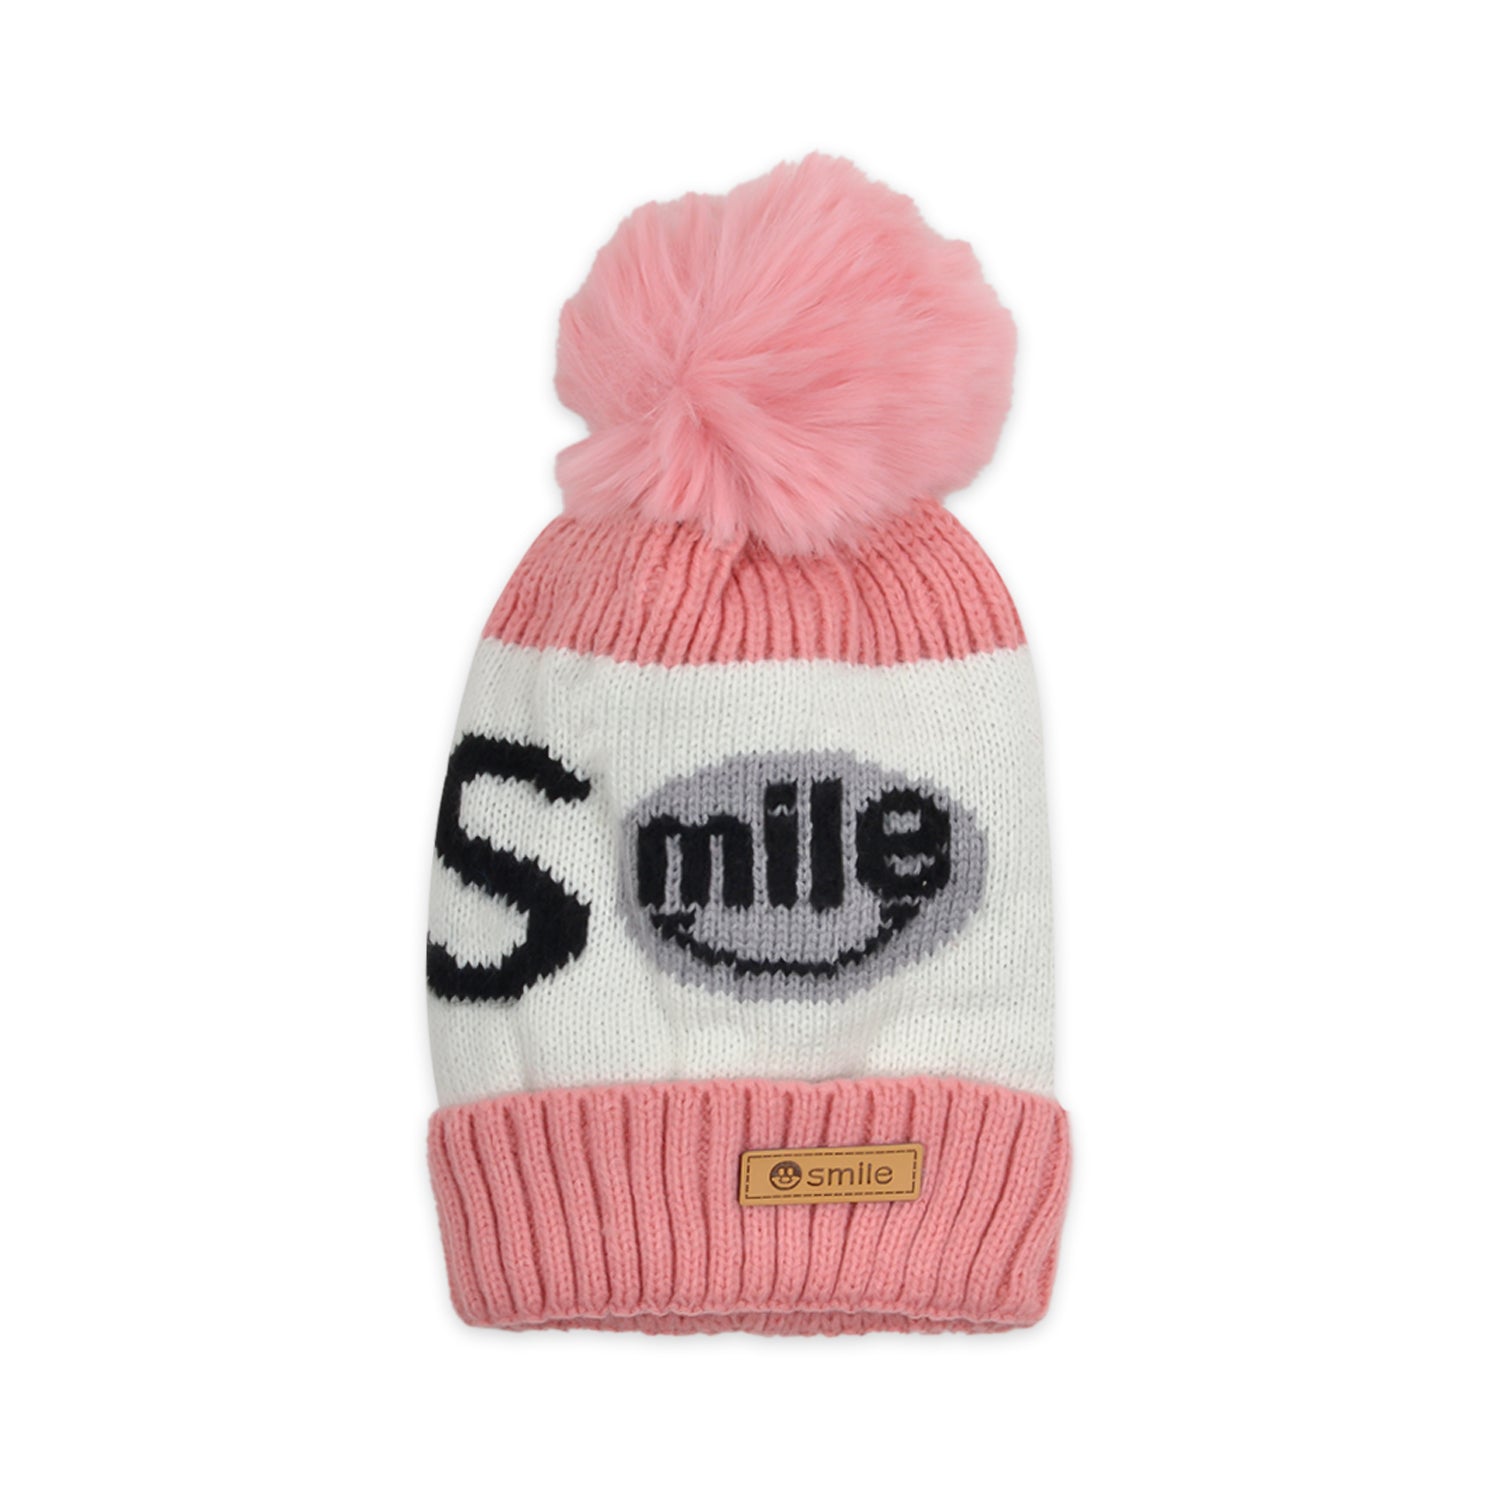 Baby Unisex Woolen Caps | Grey & Pink | Smile | Pack Of 2